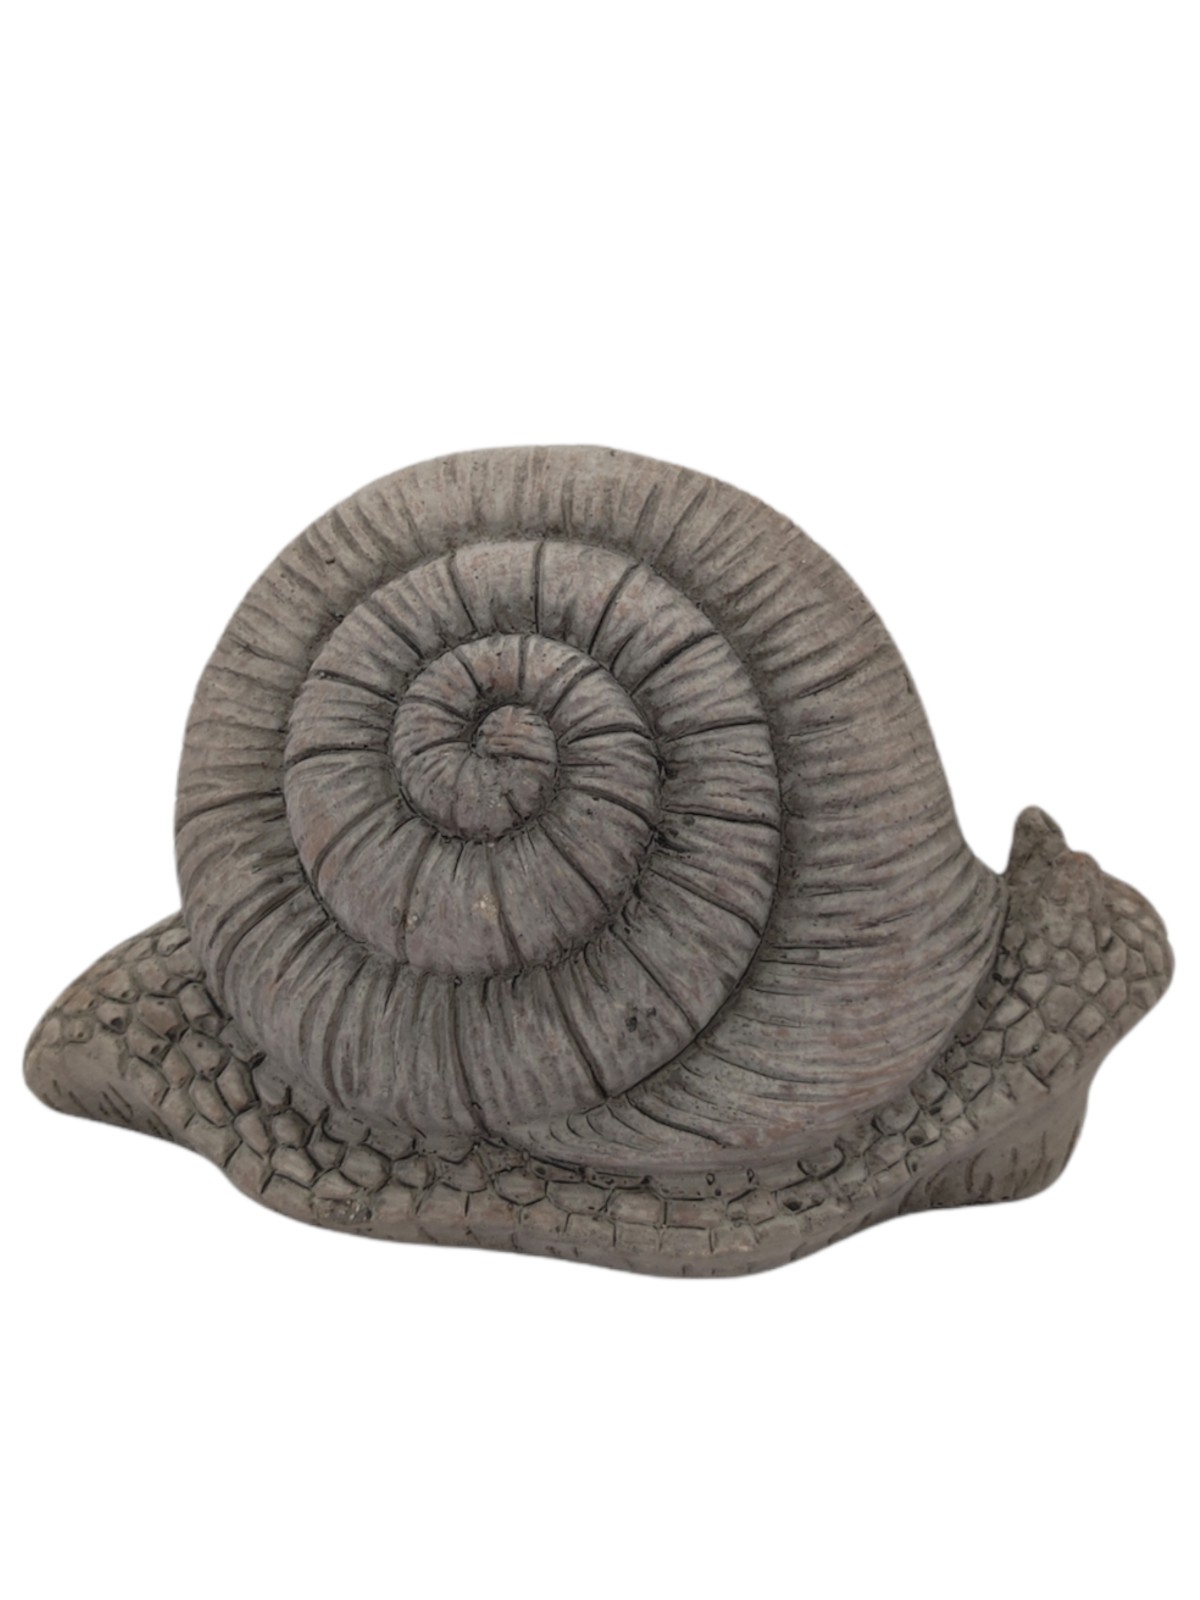 Decorative snail